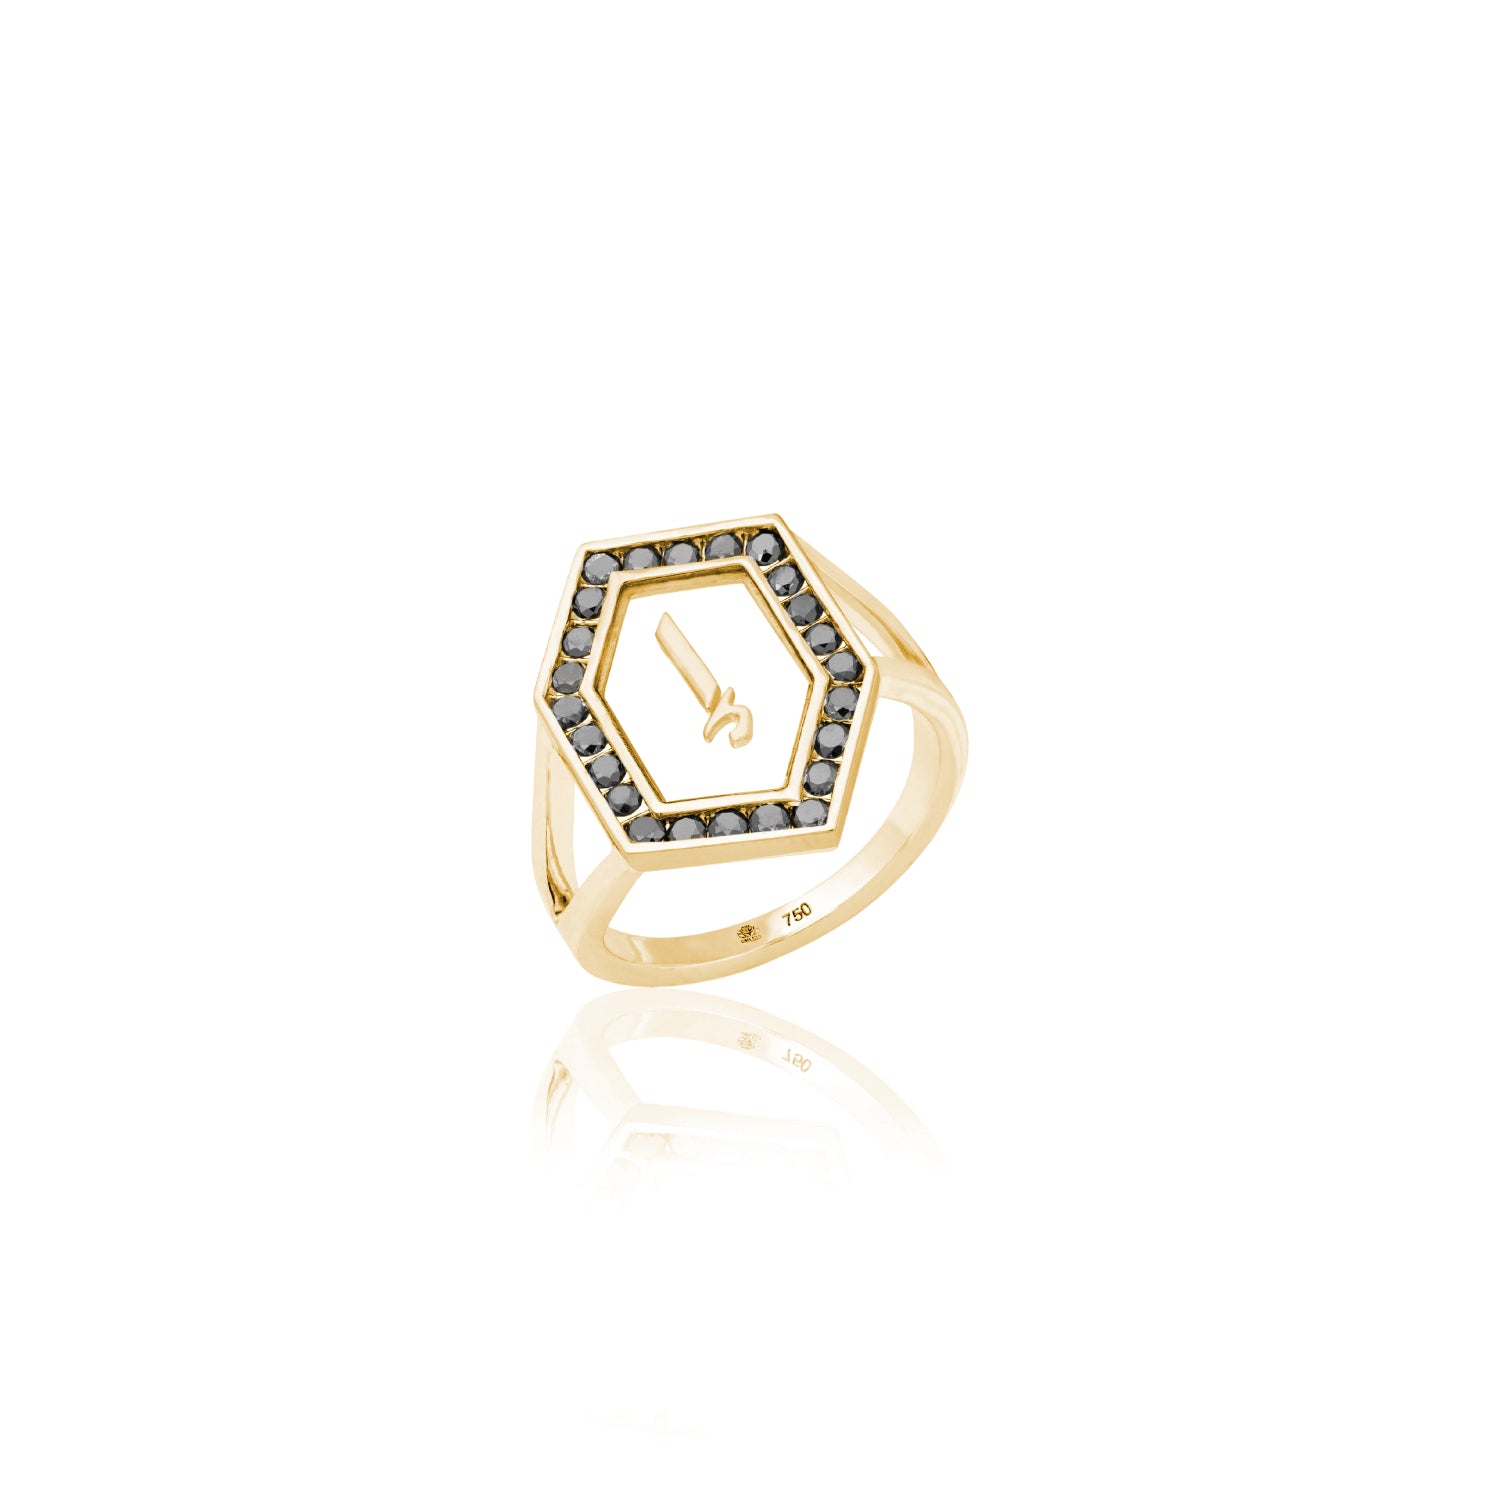 Qamoos 1.0 Letter إ Black Diamond Ring in Yellow Gold